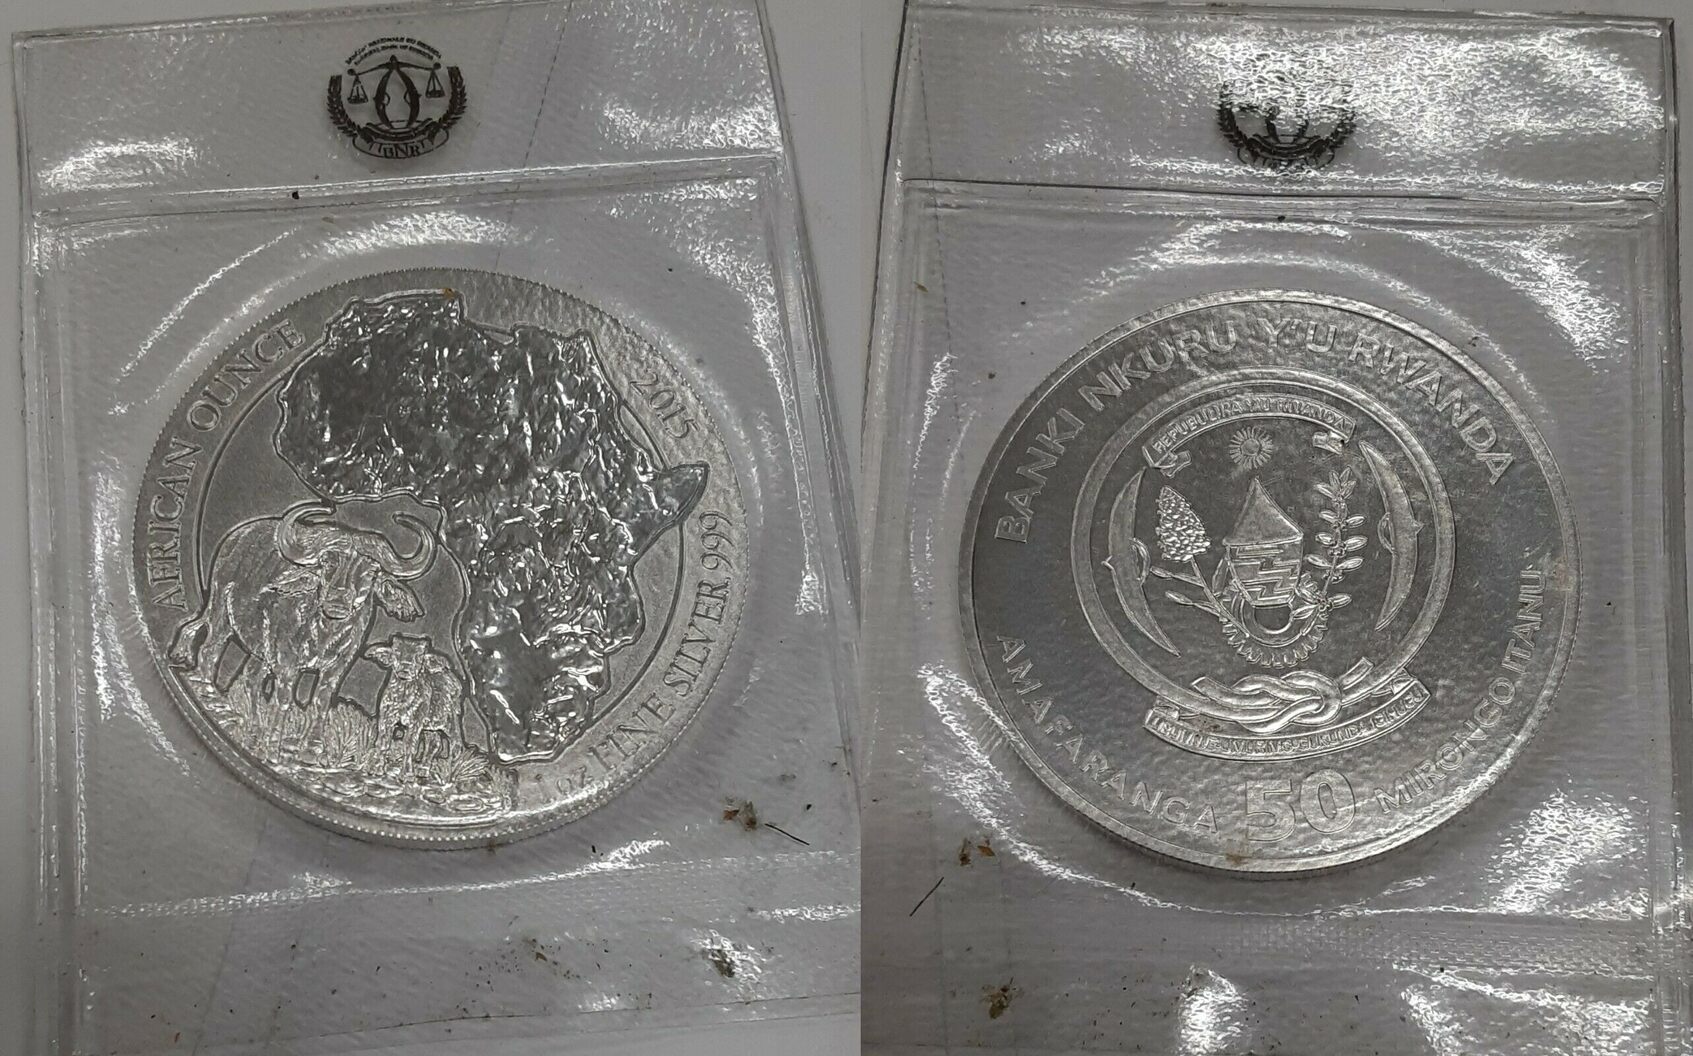 50 Amafaranga 2015 Rwanda 1 Ounce .999 Fine Silver Coin Cape Buffalo  BU/Sealed Gem Uncirculated and sealed in plastic.